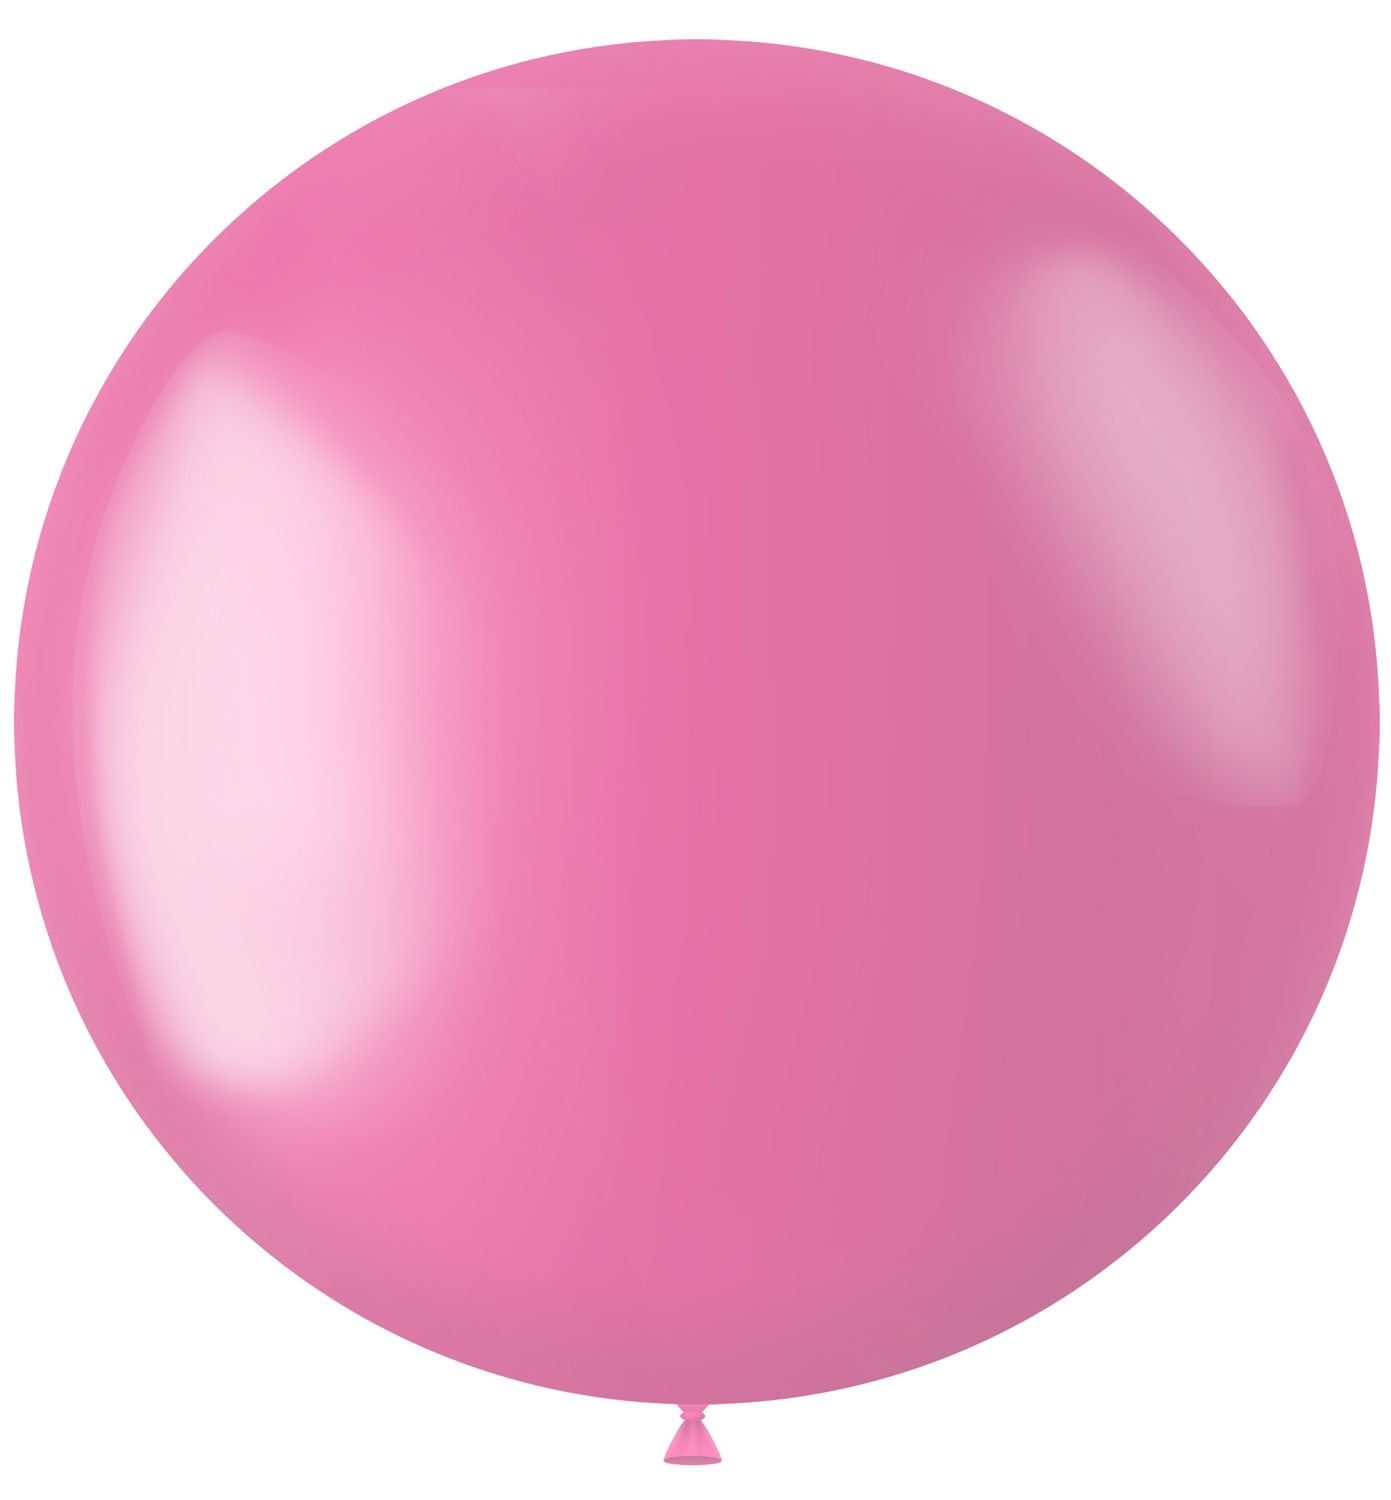 XL ballon bubblegum roze metallic